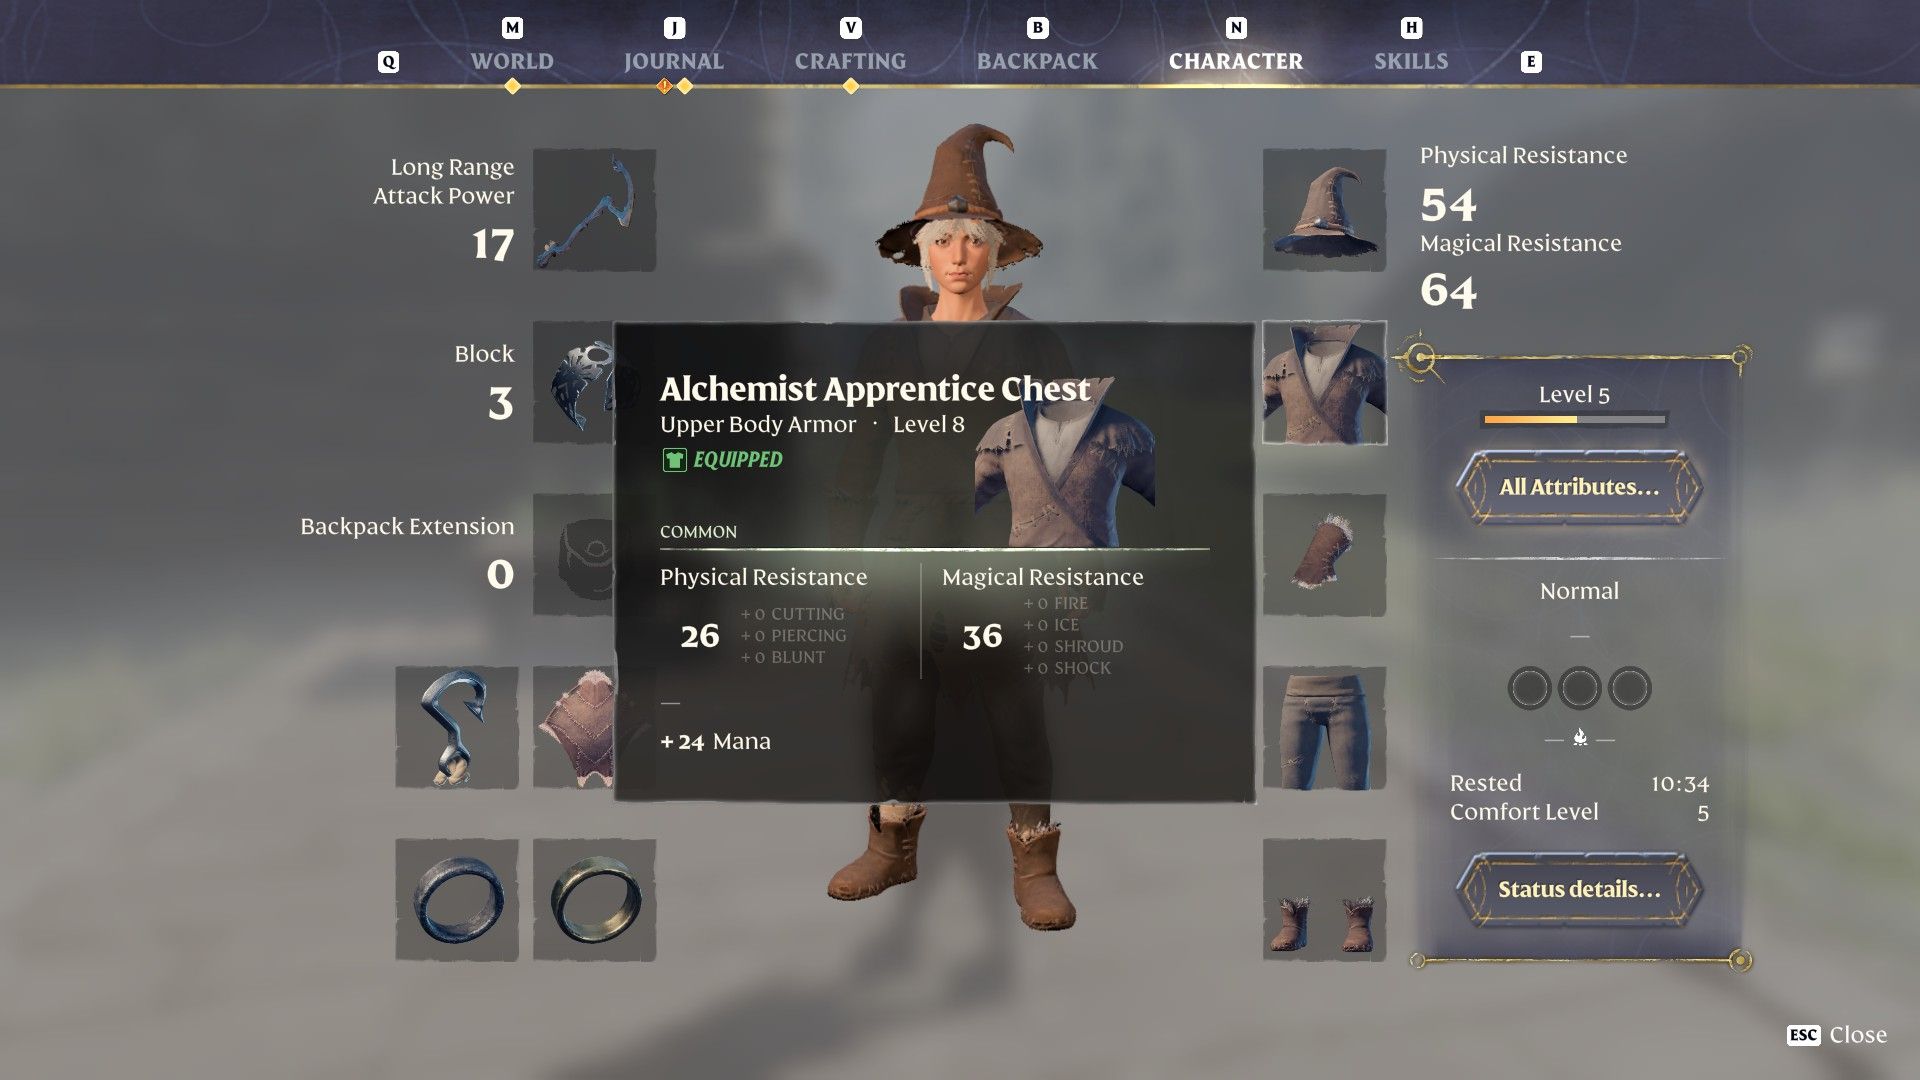 enshrouded alchemist apprentice chest piece armor on player